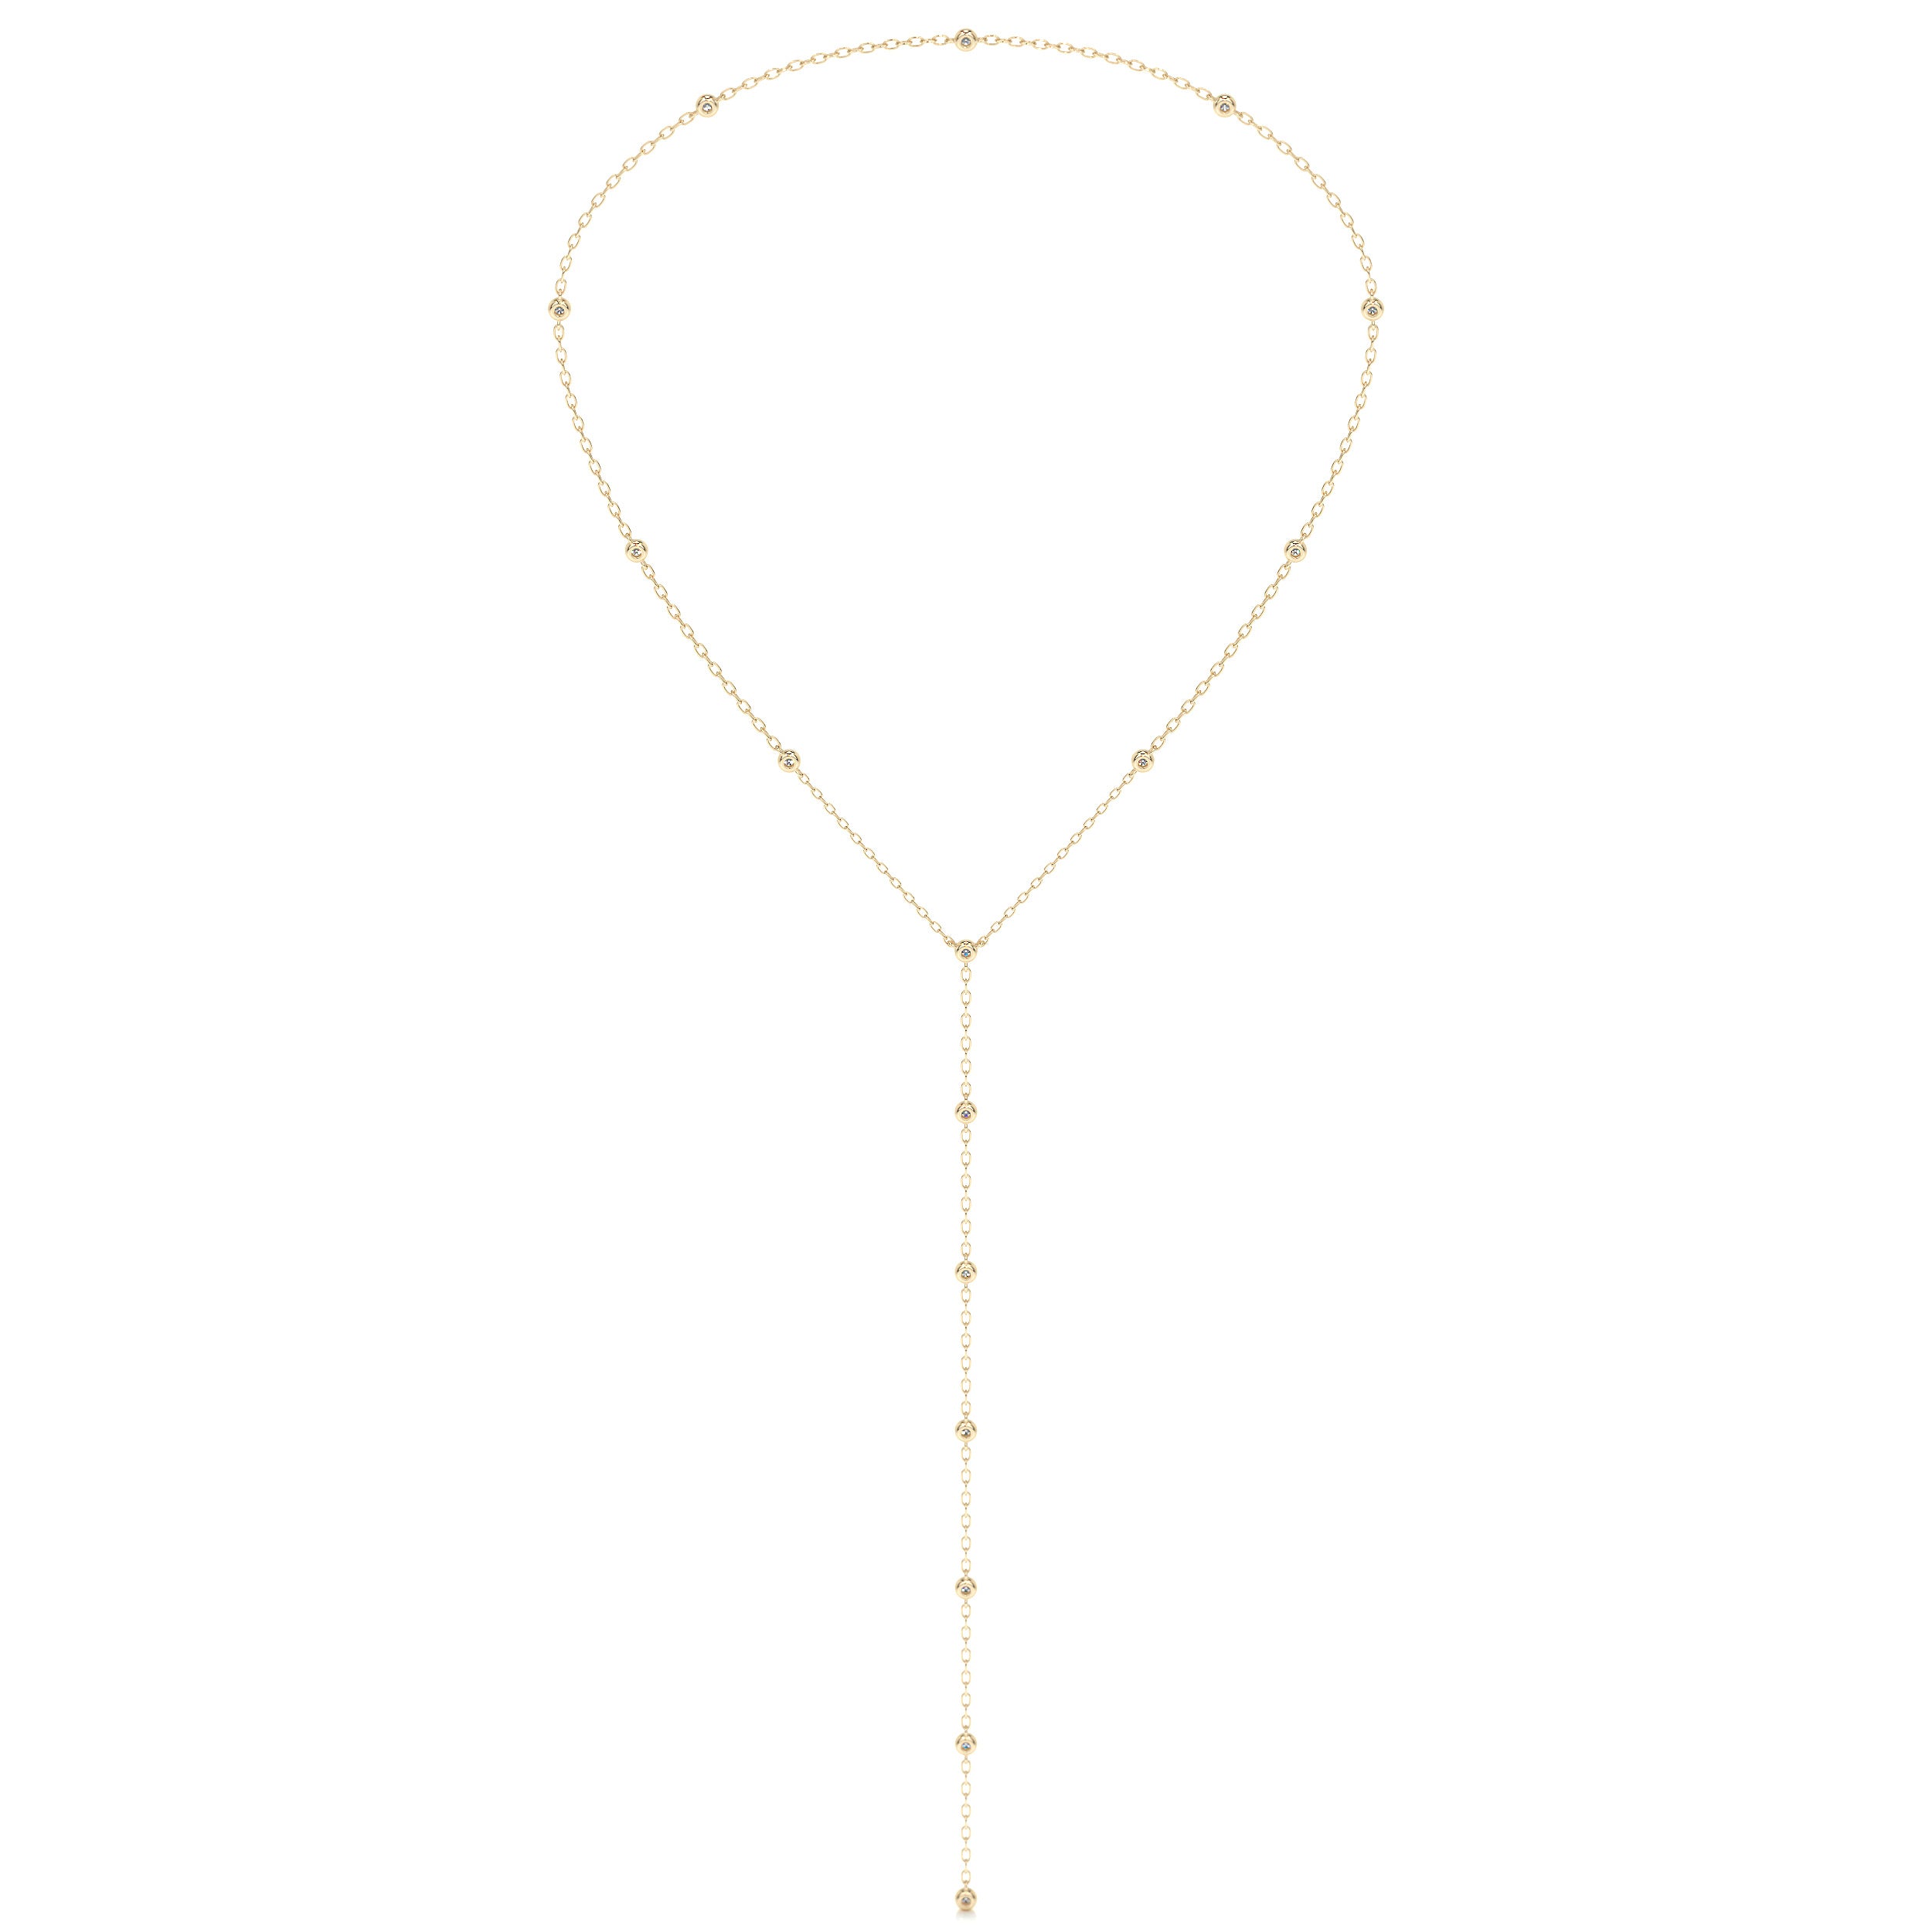 Tie Diamonds Necklace   (1.1 Carat) -18K Yellow Gold